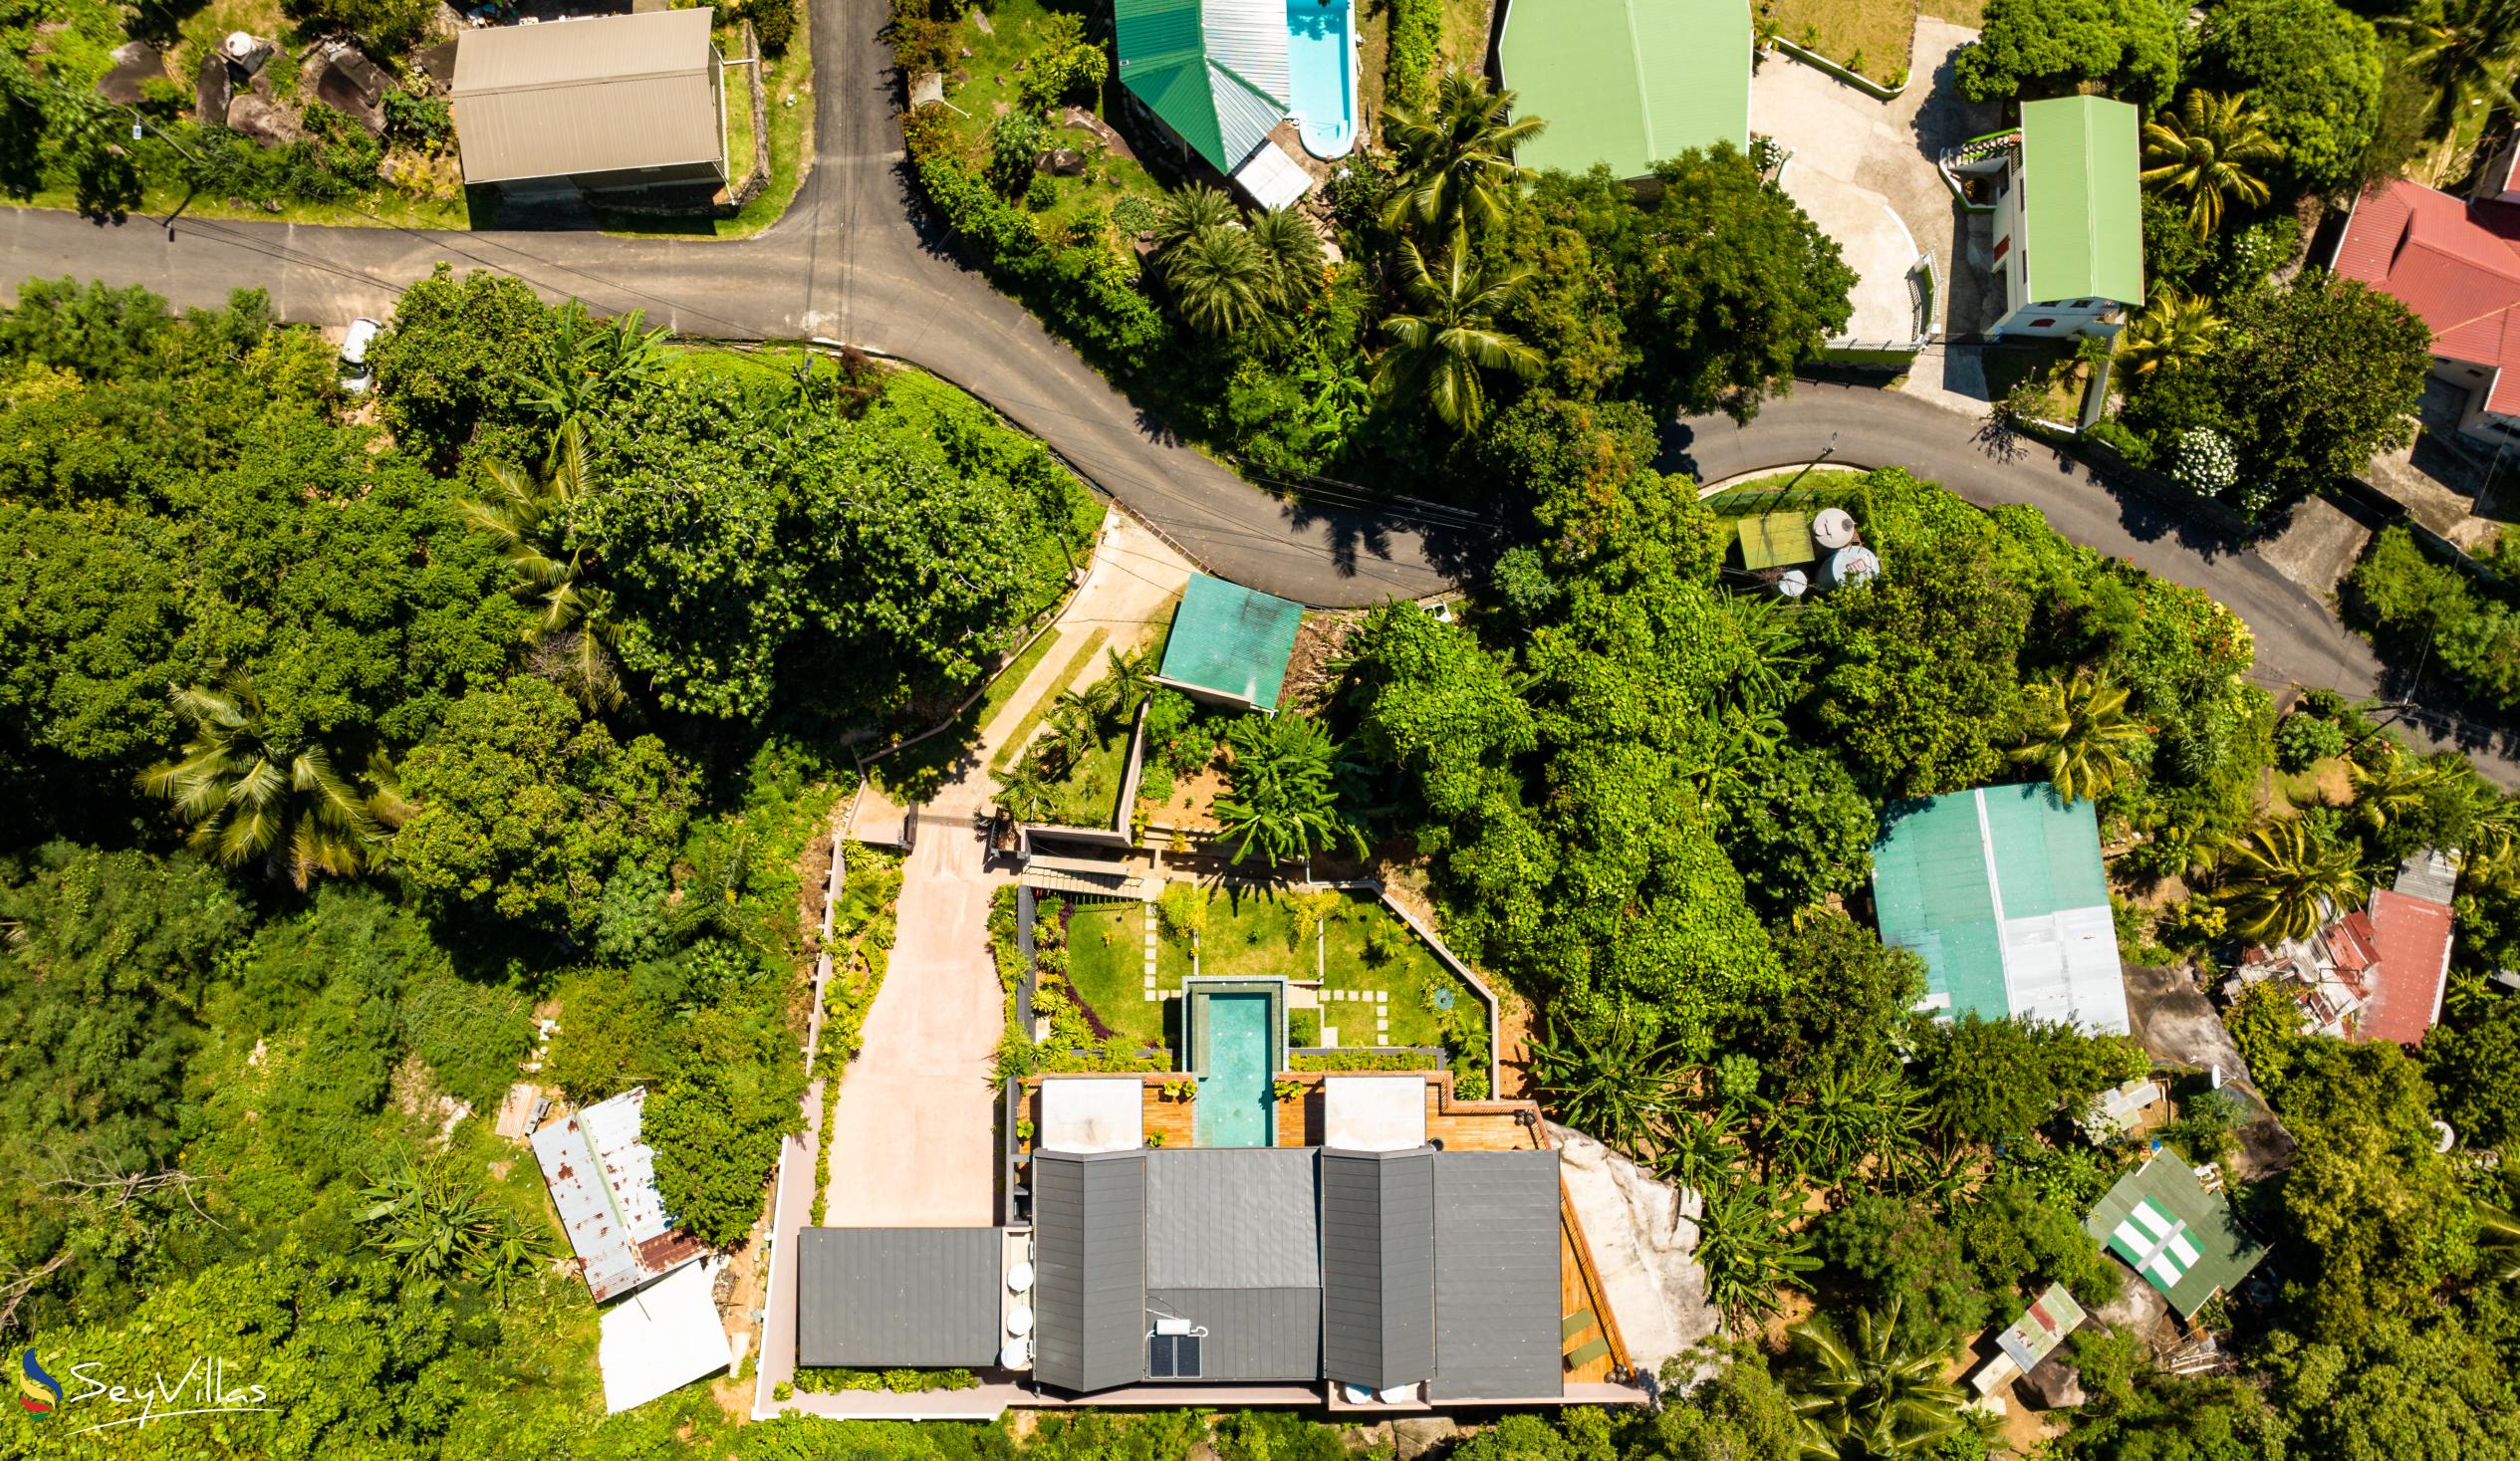 Foto 12: Maison Gaia - Aussenbereich - Mahé (Seychellen)